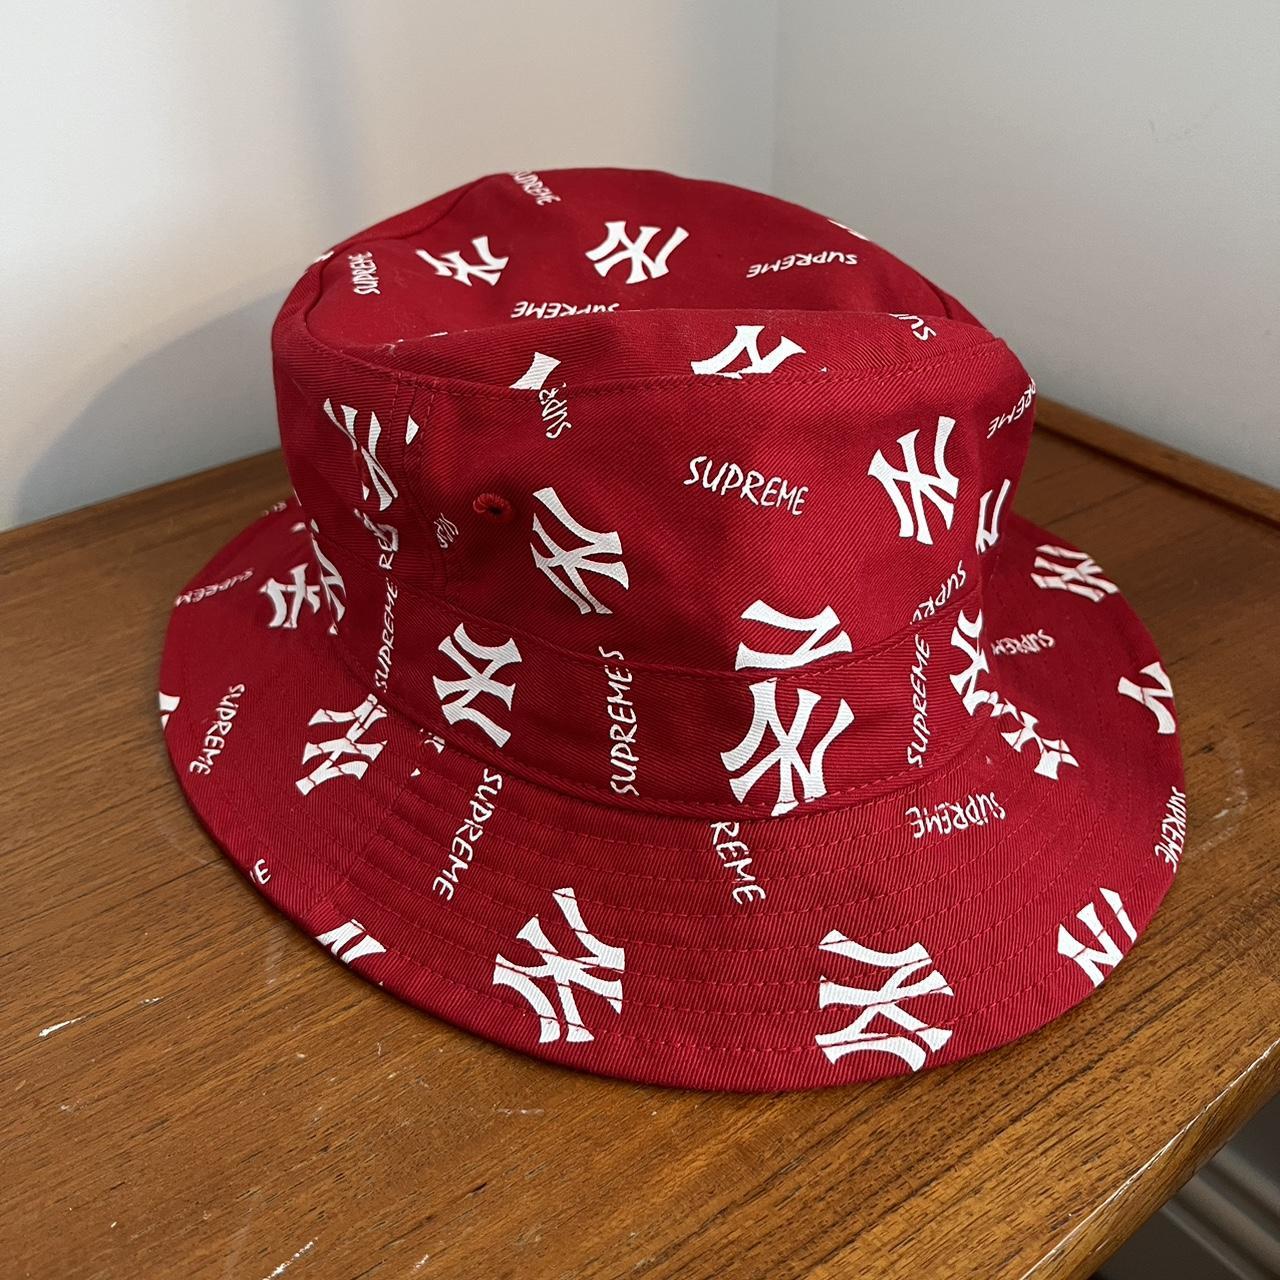 Supreme x '47 New York Yankees bucket hat. Very rare - Depop